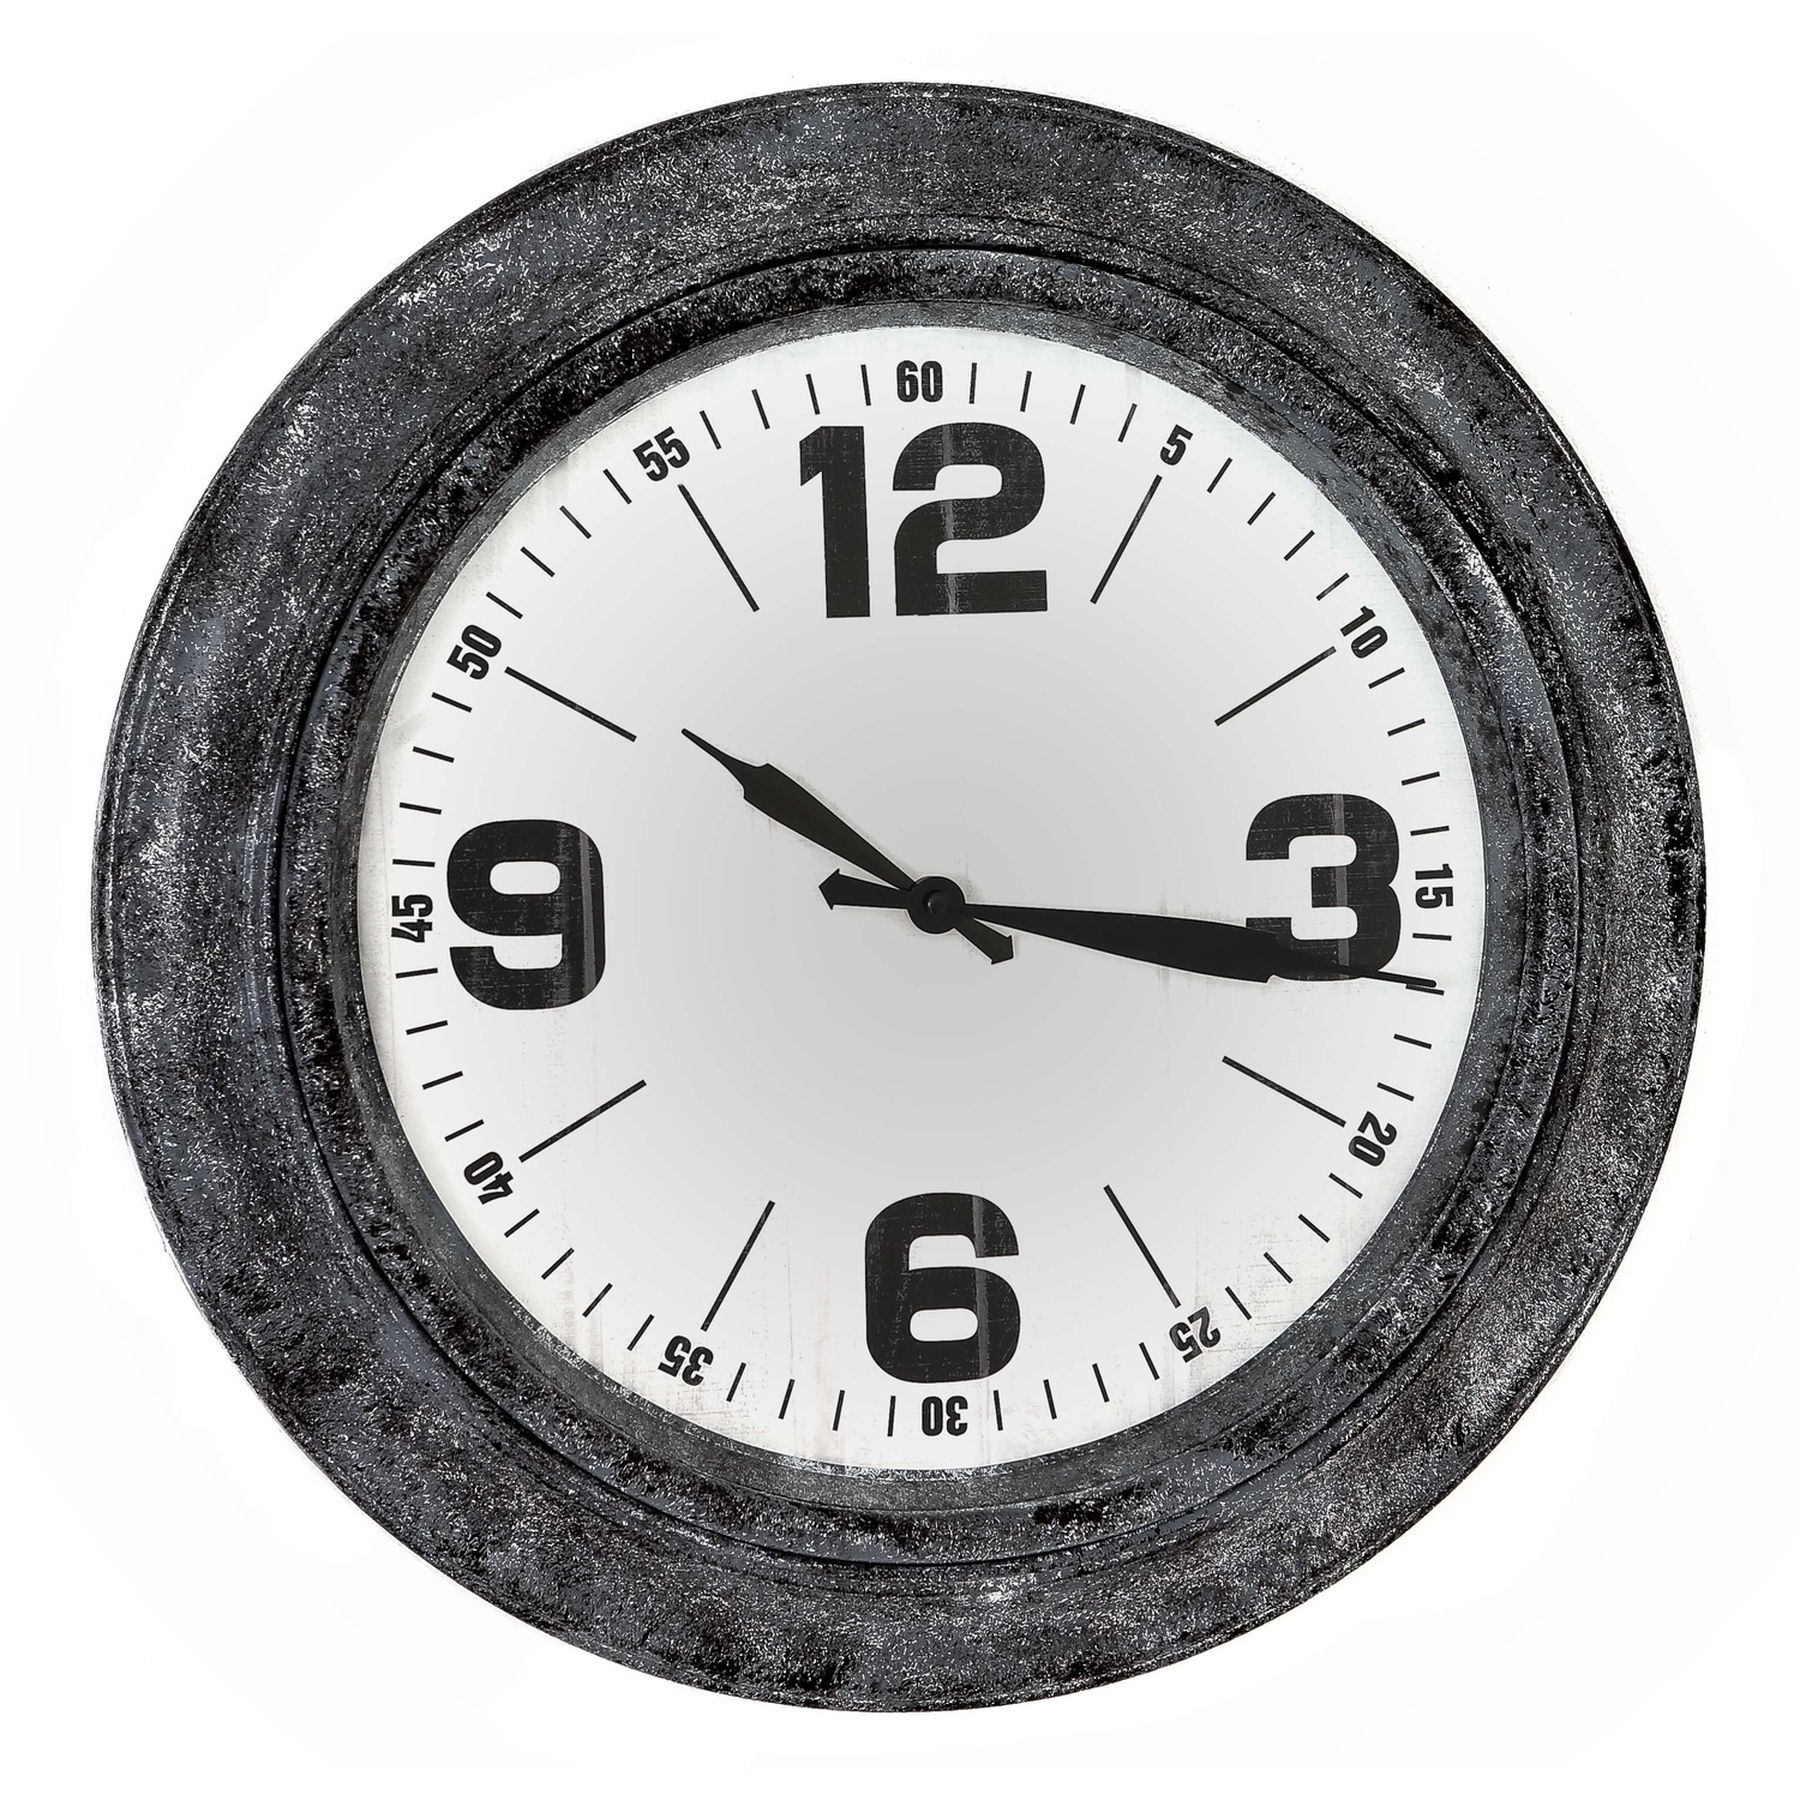 Roco Wall Clock - Image 1